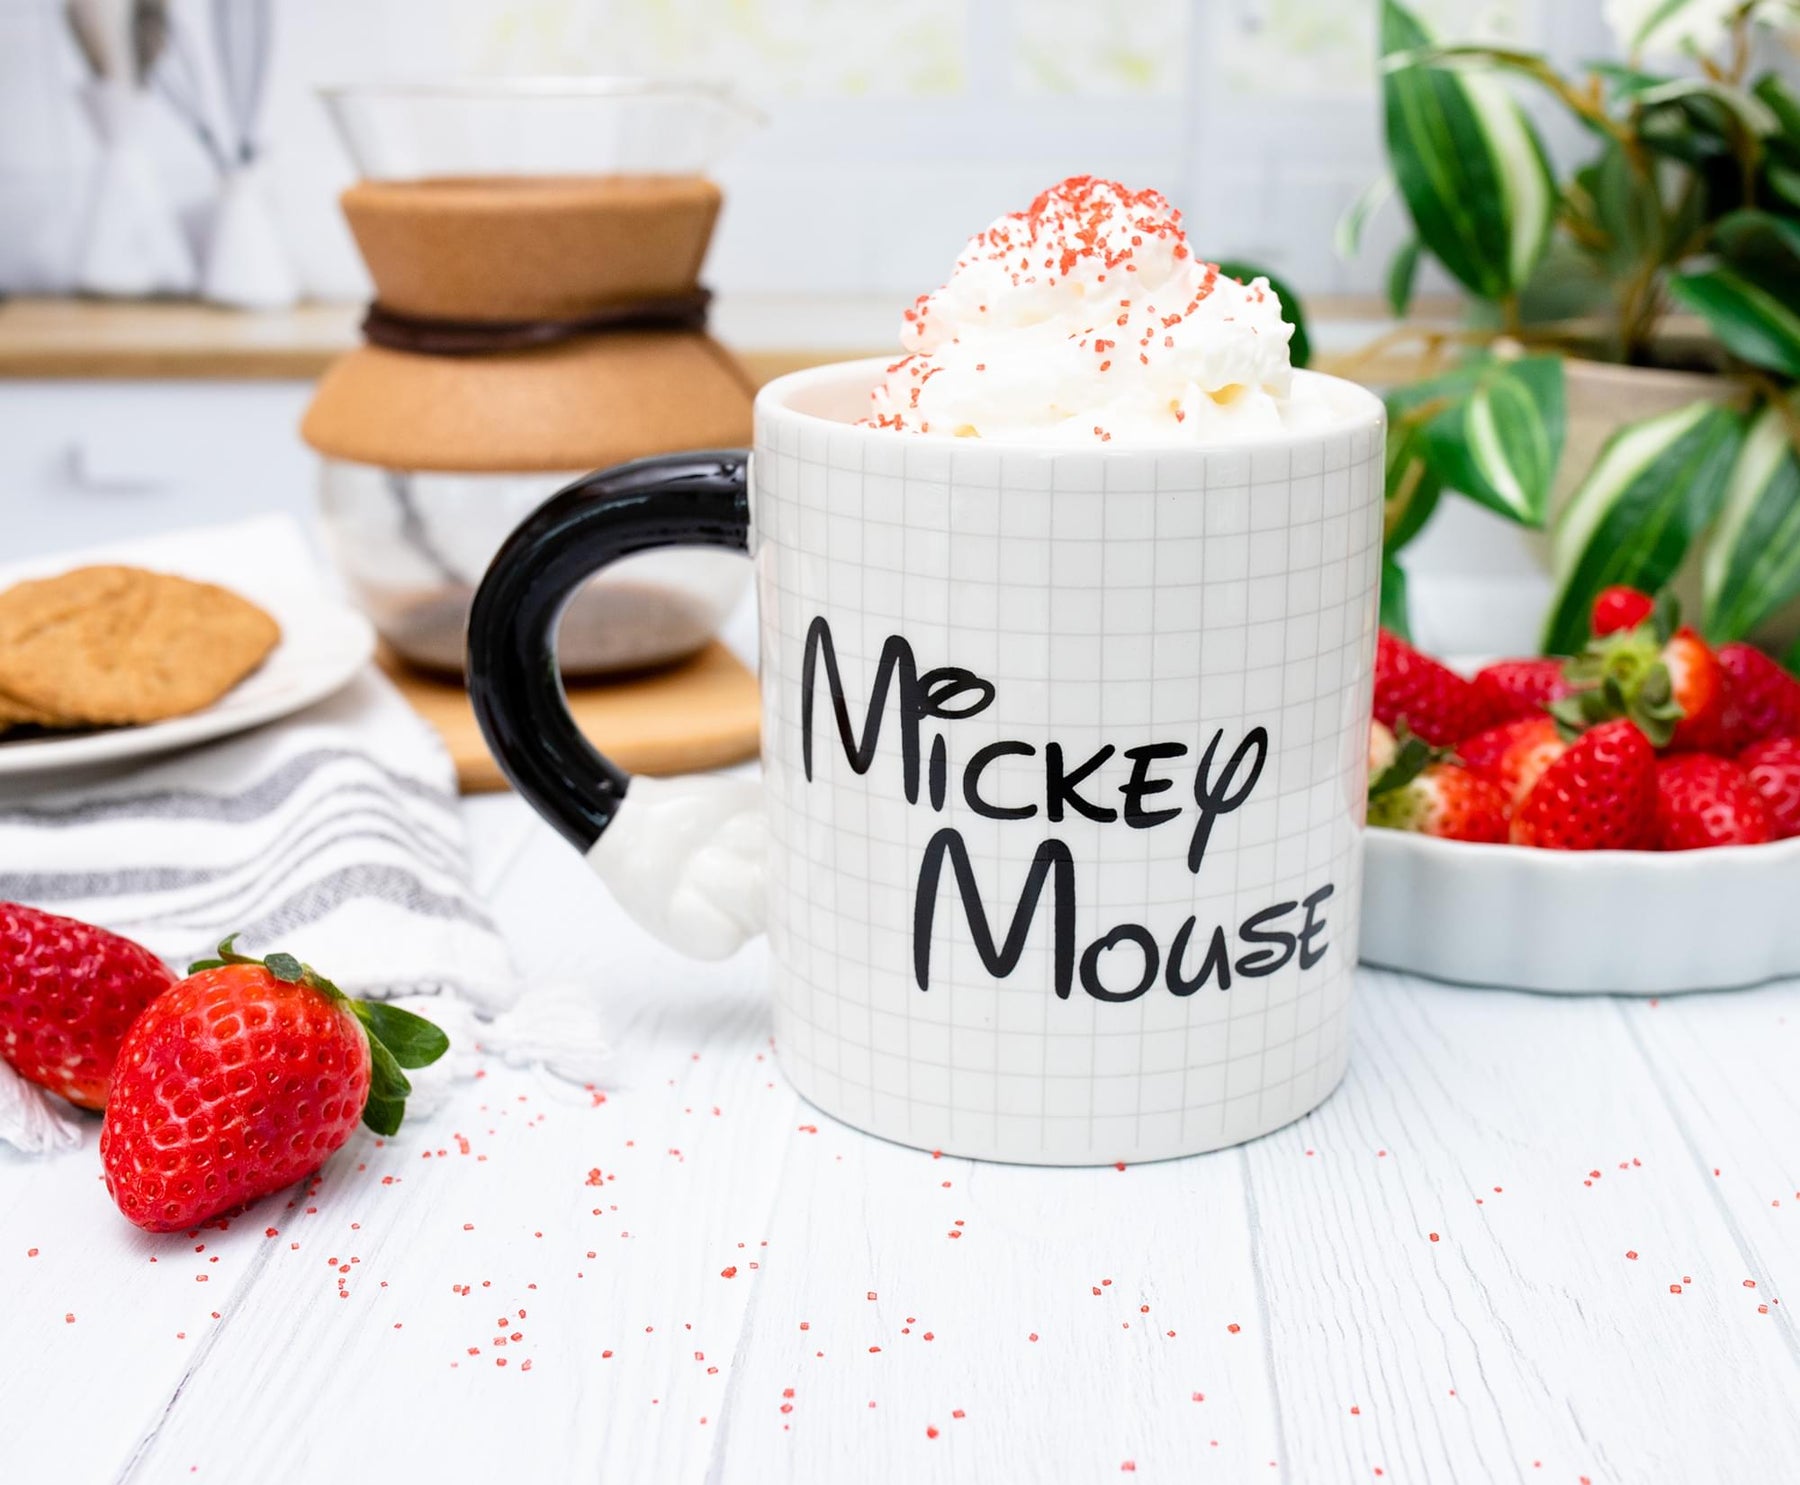 Mickey Mouse Sculpted Mug